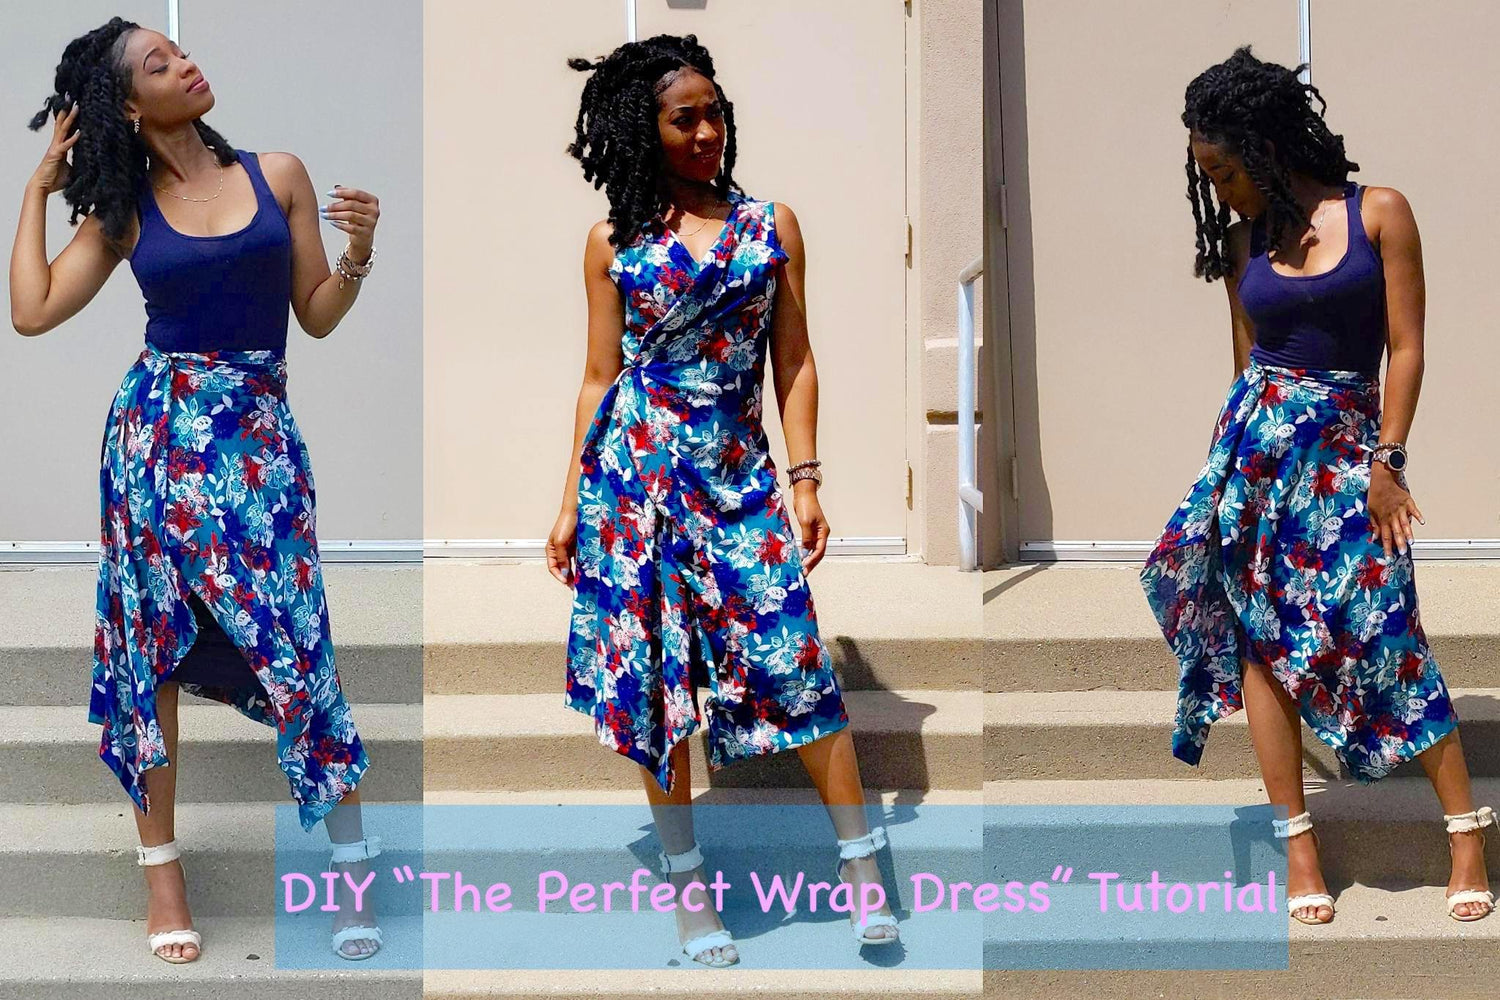 DIY "The Perfect Wrap Dress" Tutorial